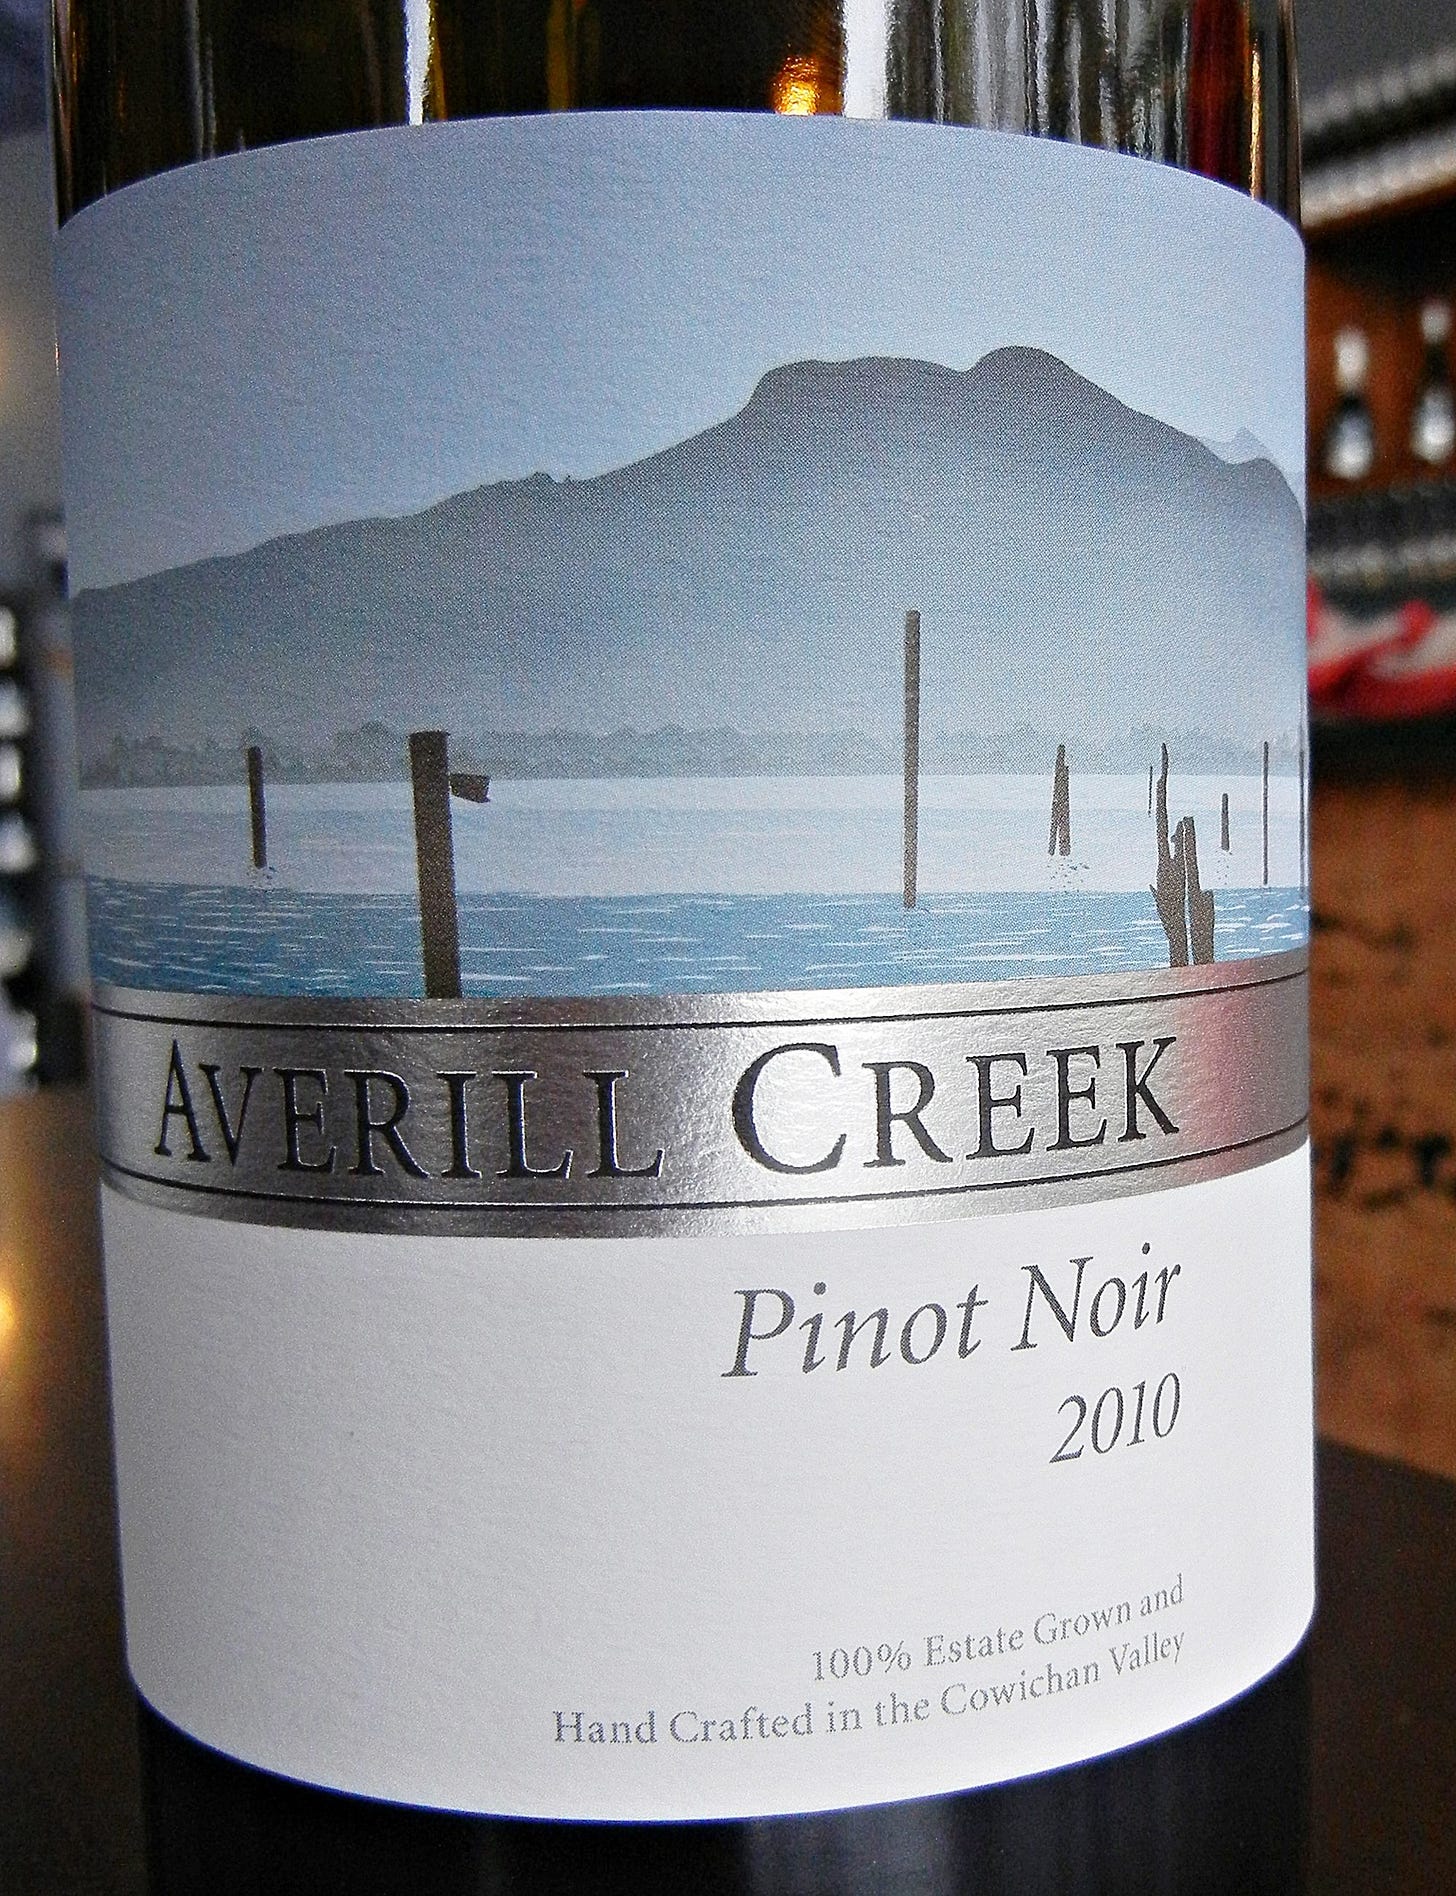 Averill Creek Pinot Noir 2010 Label - BC Pinot Noir Tasting Review 24